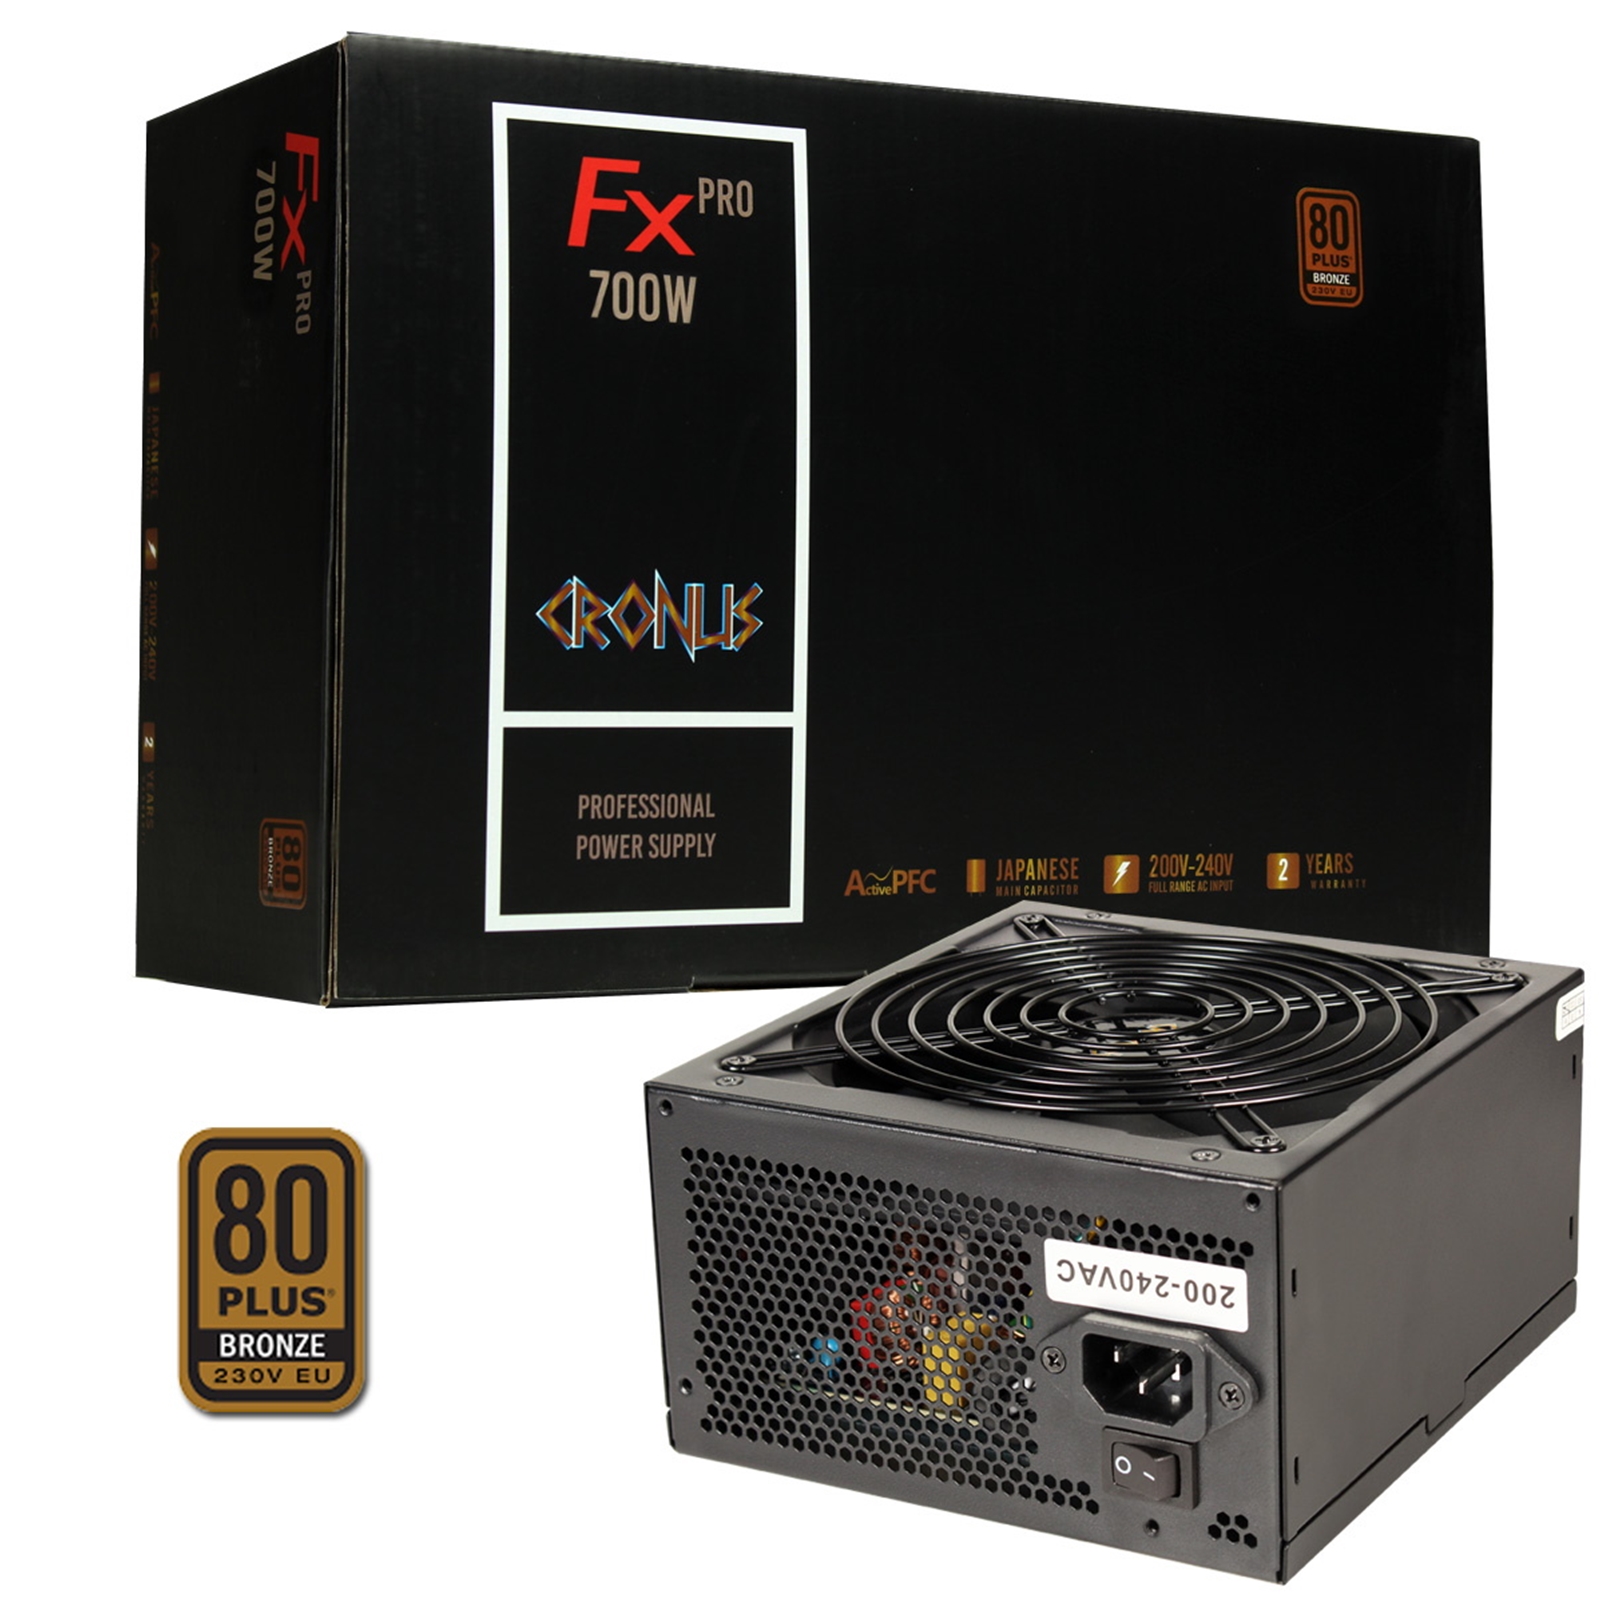 CRONUS 700ATV FX PRO 700W PSU, 140mm Silent Cooling Fan, 80 PLUS Bronze, Non Modular, Flat Black Cables, Supreme Performance